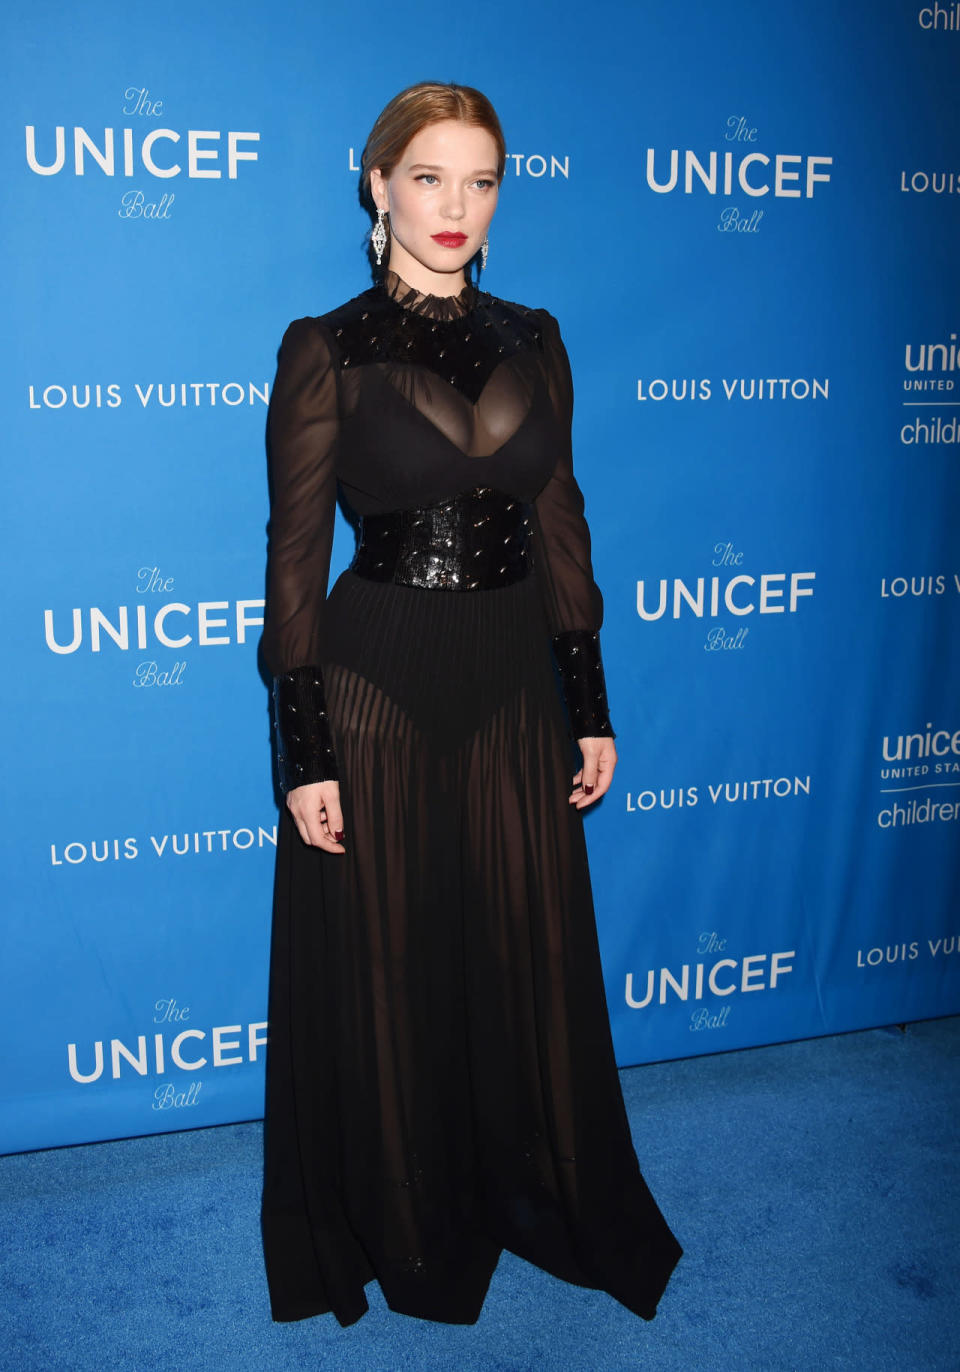 Léa Seydoux wore custom Louis Vuitton to the 6th Biennial UNICEF Ball.